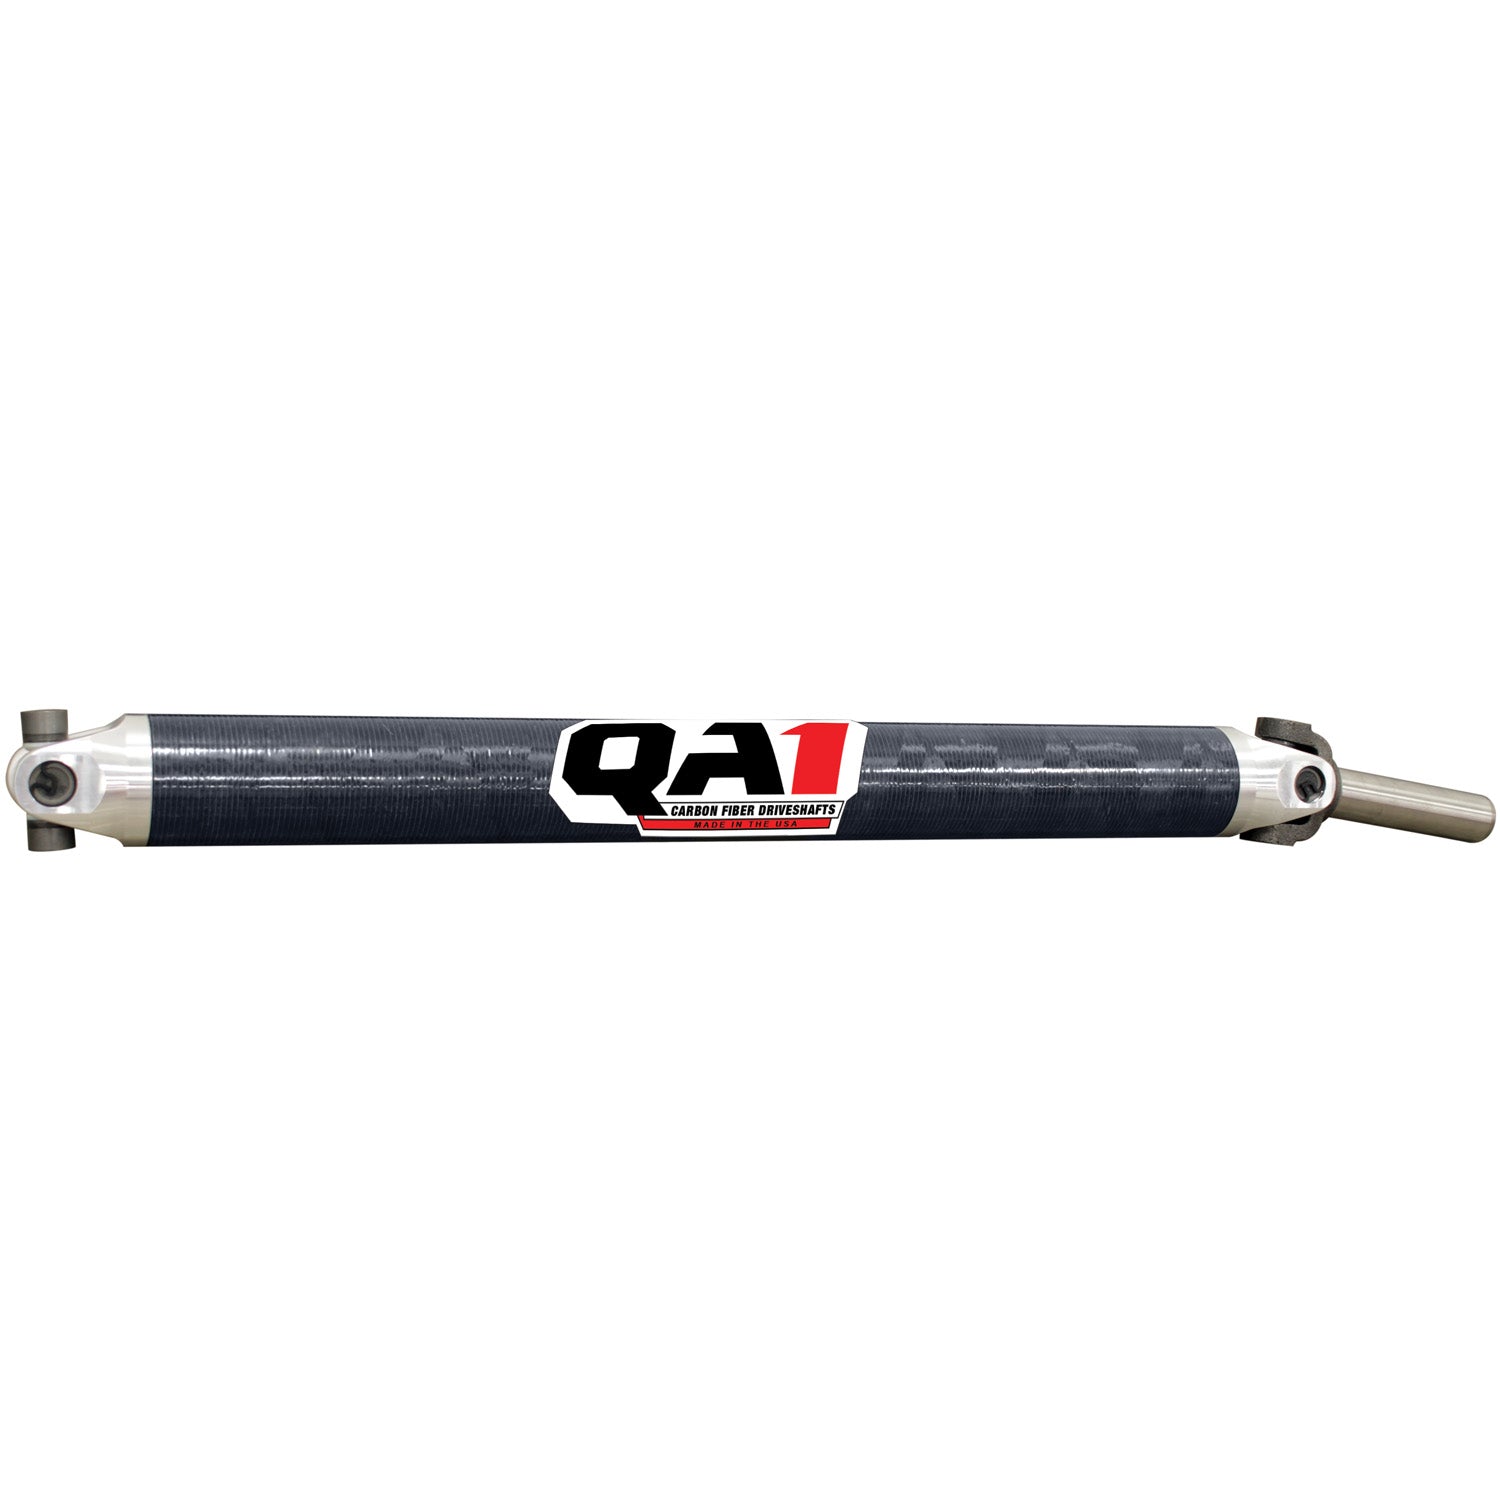 QA1 JJ-11239 Driveshaft, Cf, Ct-Dirt LM, Sy 35.00 XM 3.2, 1310 U-Joint, Gm 27Sp, 8